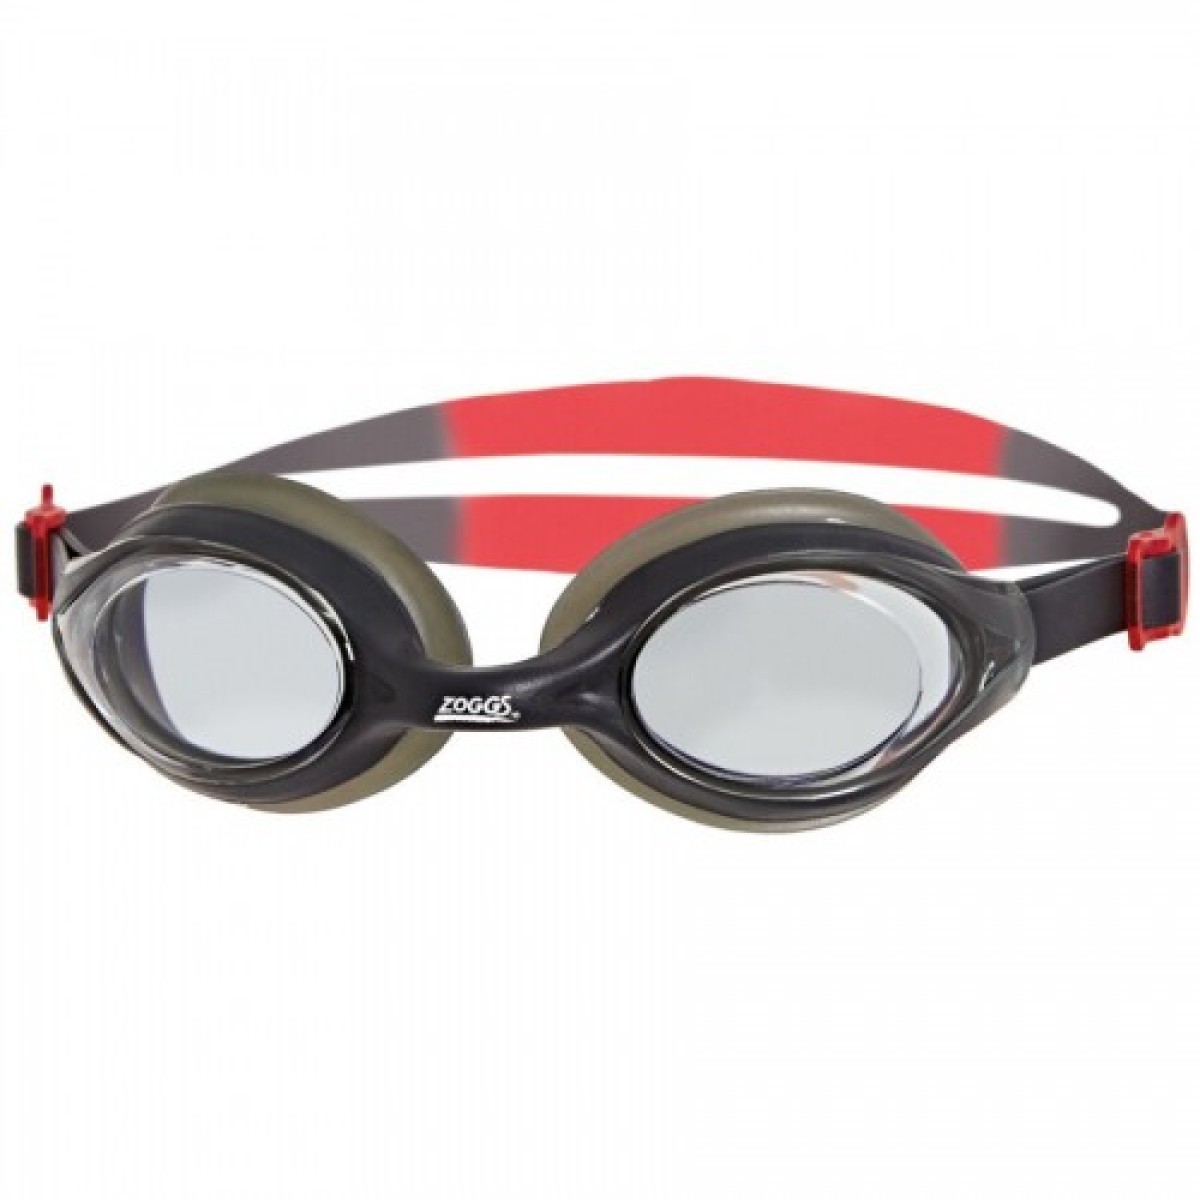 Swimming goggles Bondi blue/grey/clear ZOGGS - view 4